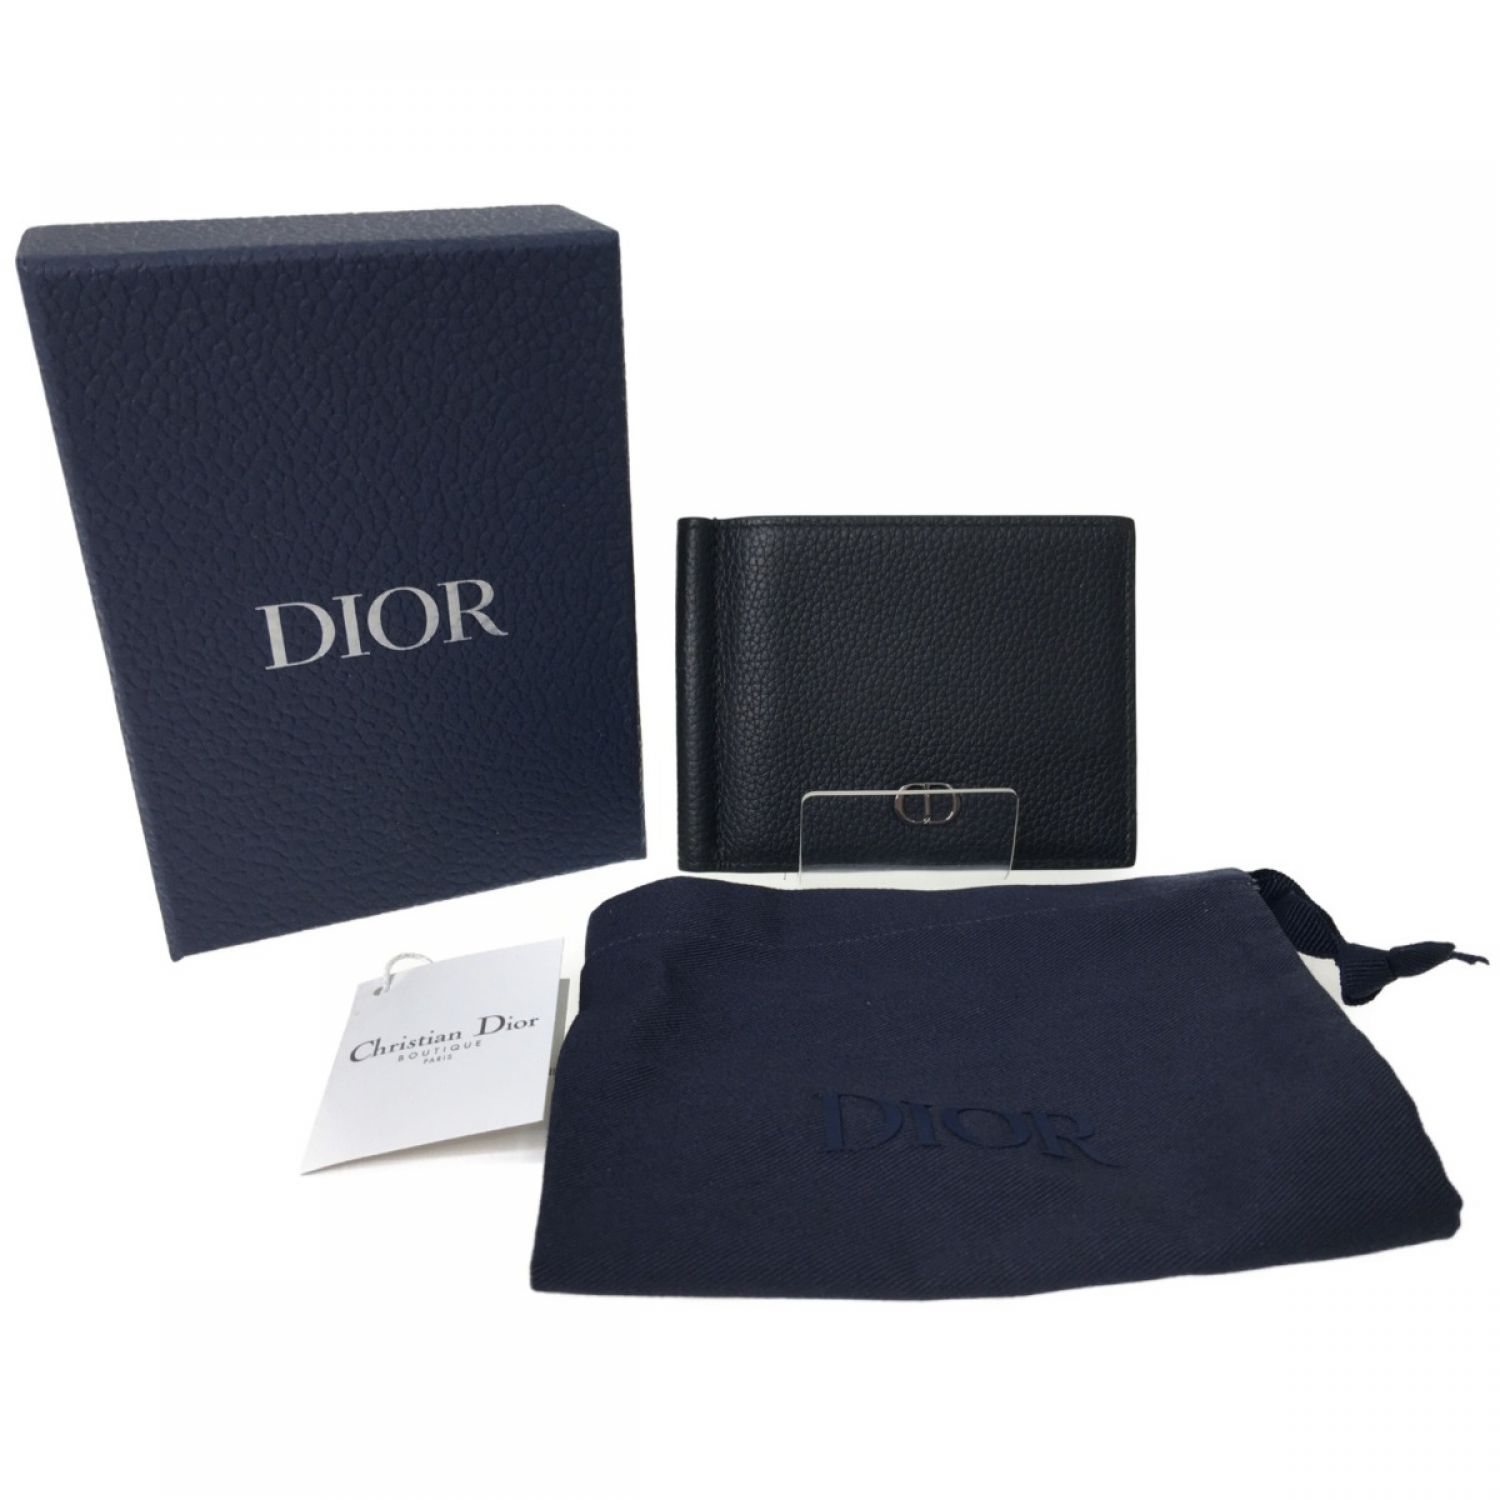 ▼▼Christian Dior クリスチャンディオール ディオールオム メンズ マネークリップ カードケース ブラック